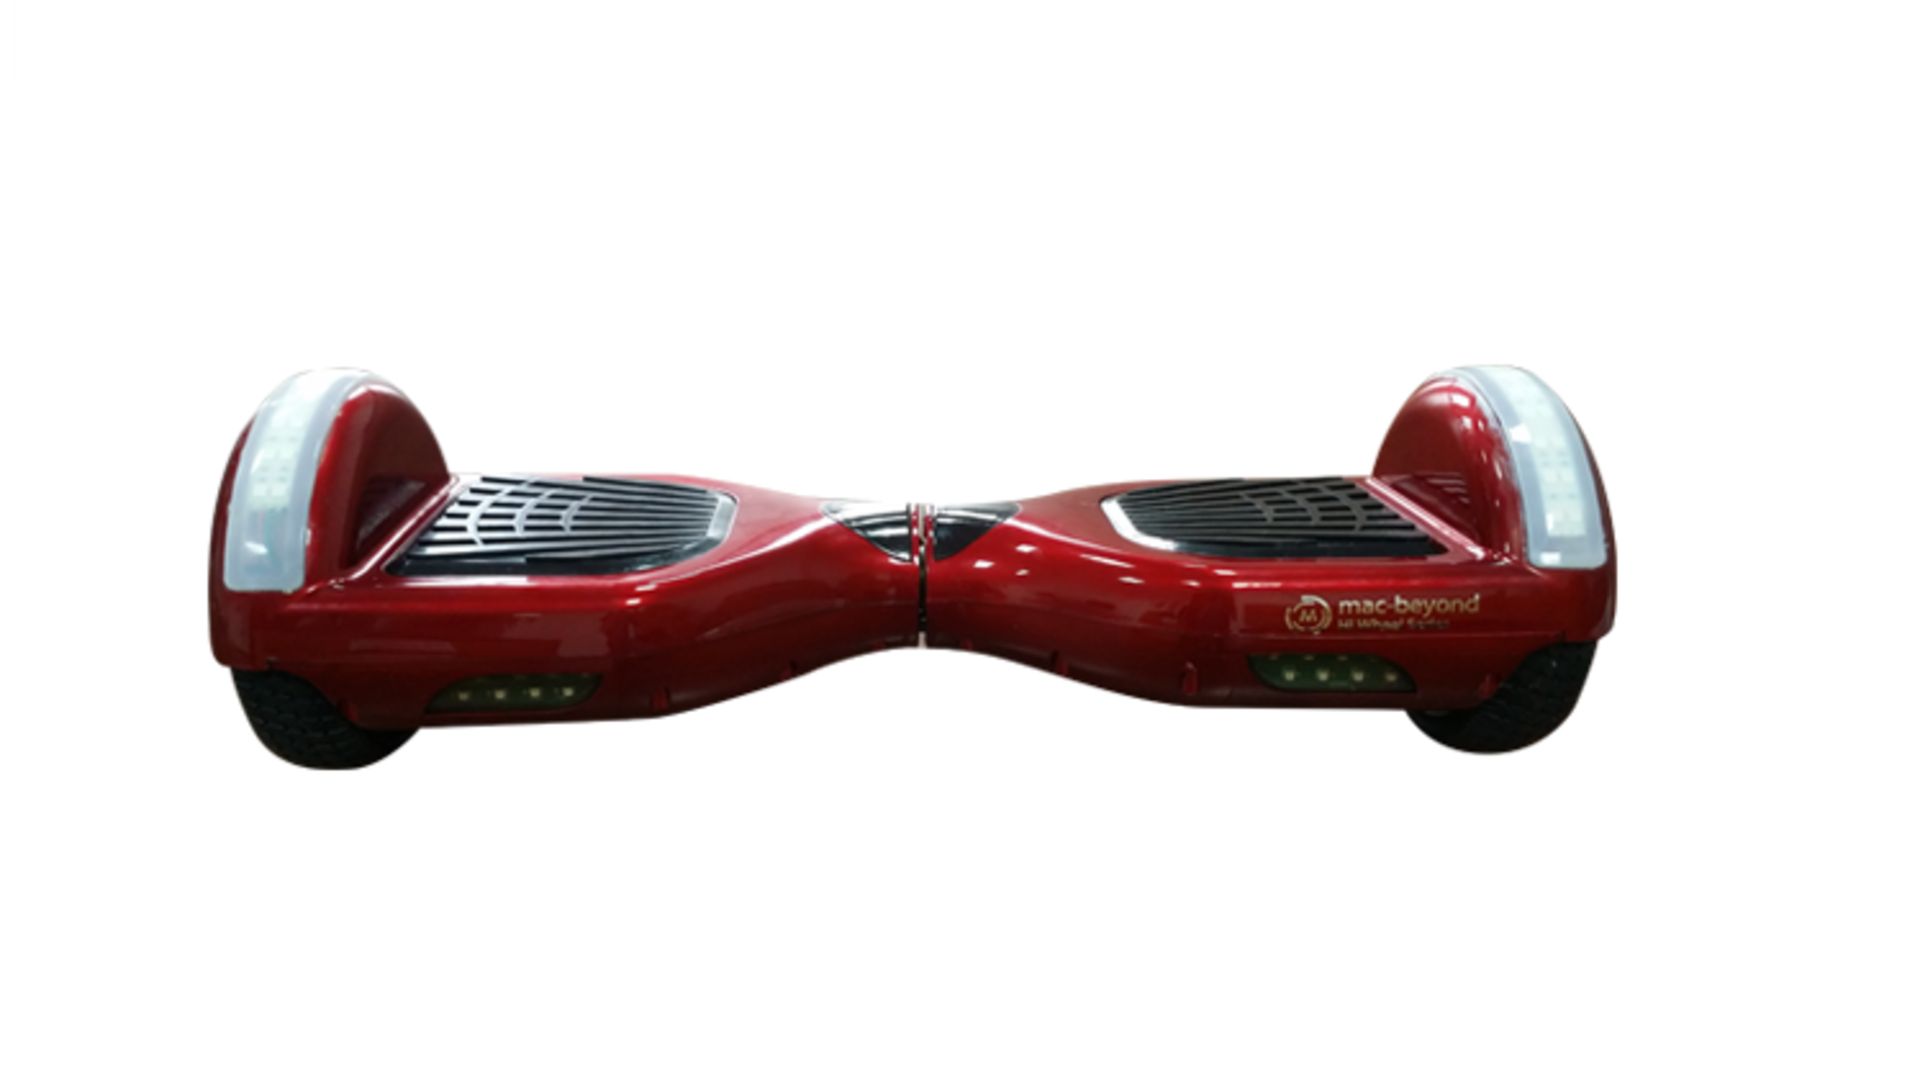 macbeyond x Hi wheel Series, Red Model Name: R2 LED (6.5 inch wheels, Best Seller) Smart personal - Image 2 of 8